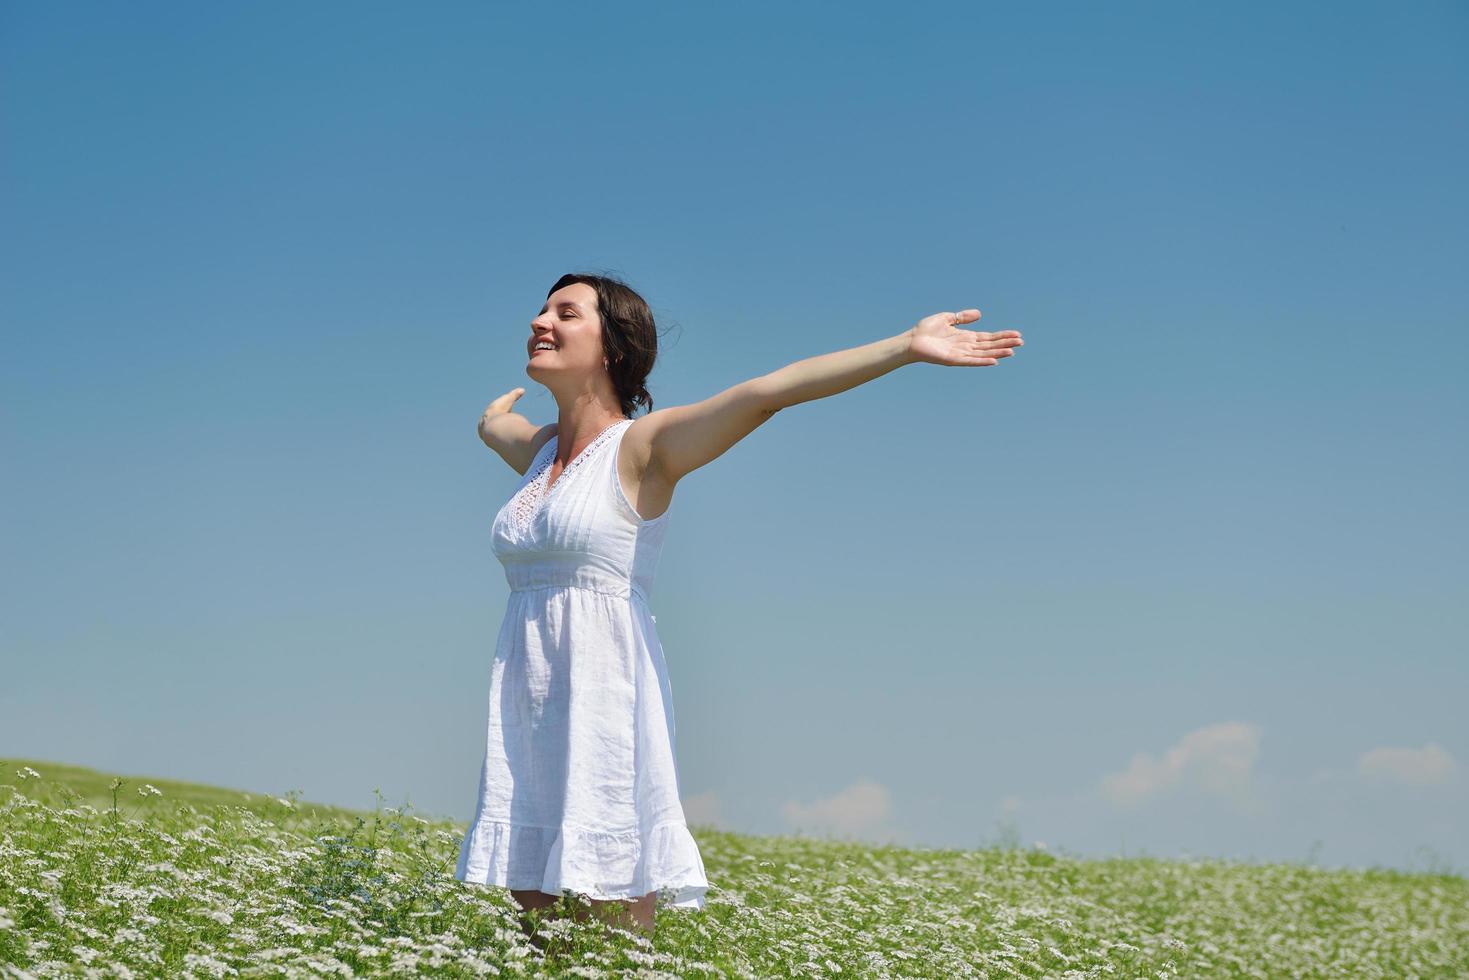 jeune femme heureuse dans un champ vert photo